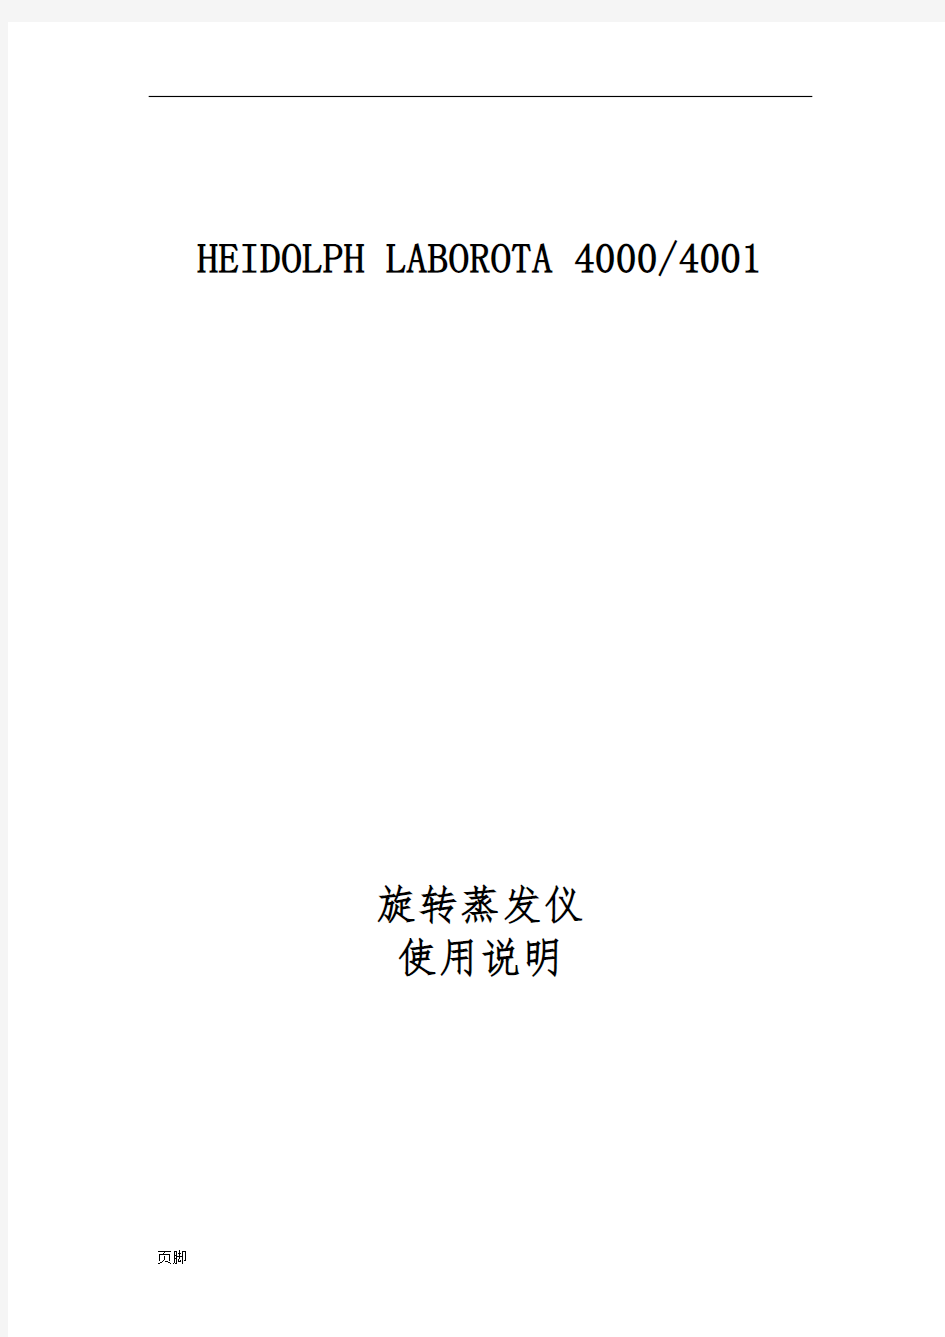 HEIDOLPH-4000-4001旋转蒸发仪使用说明书